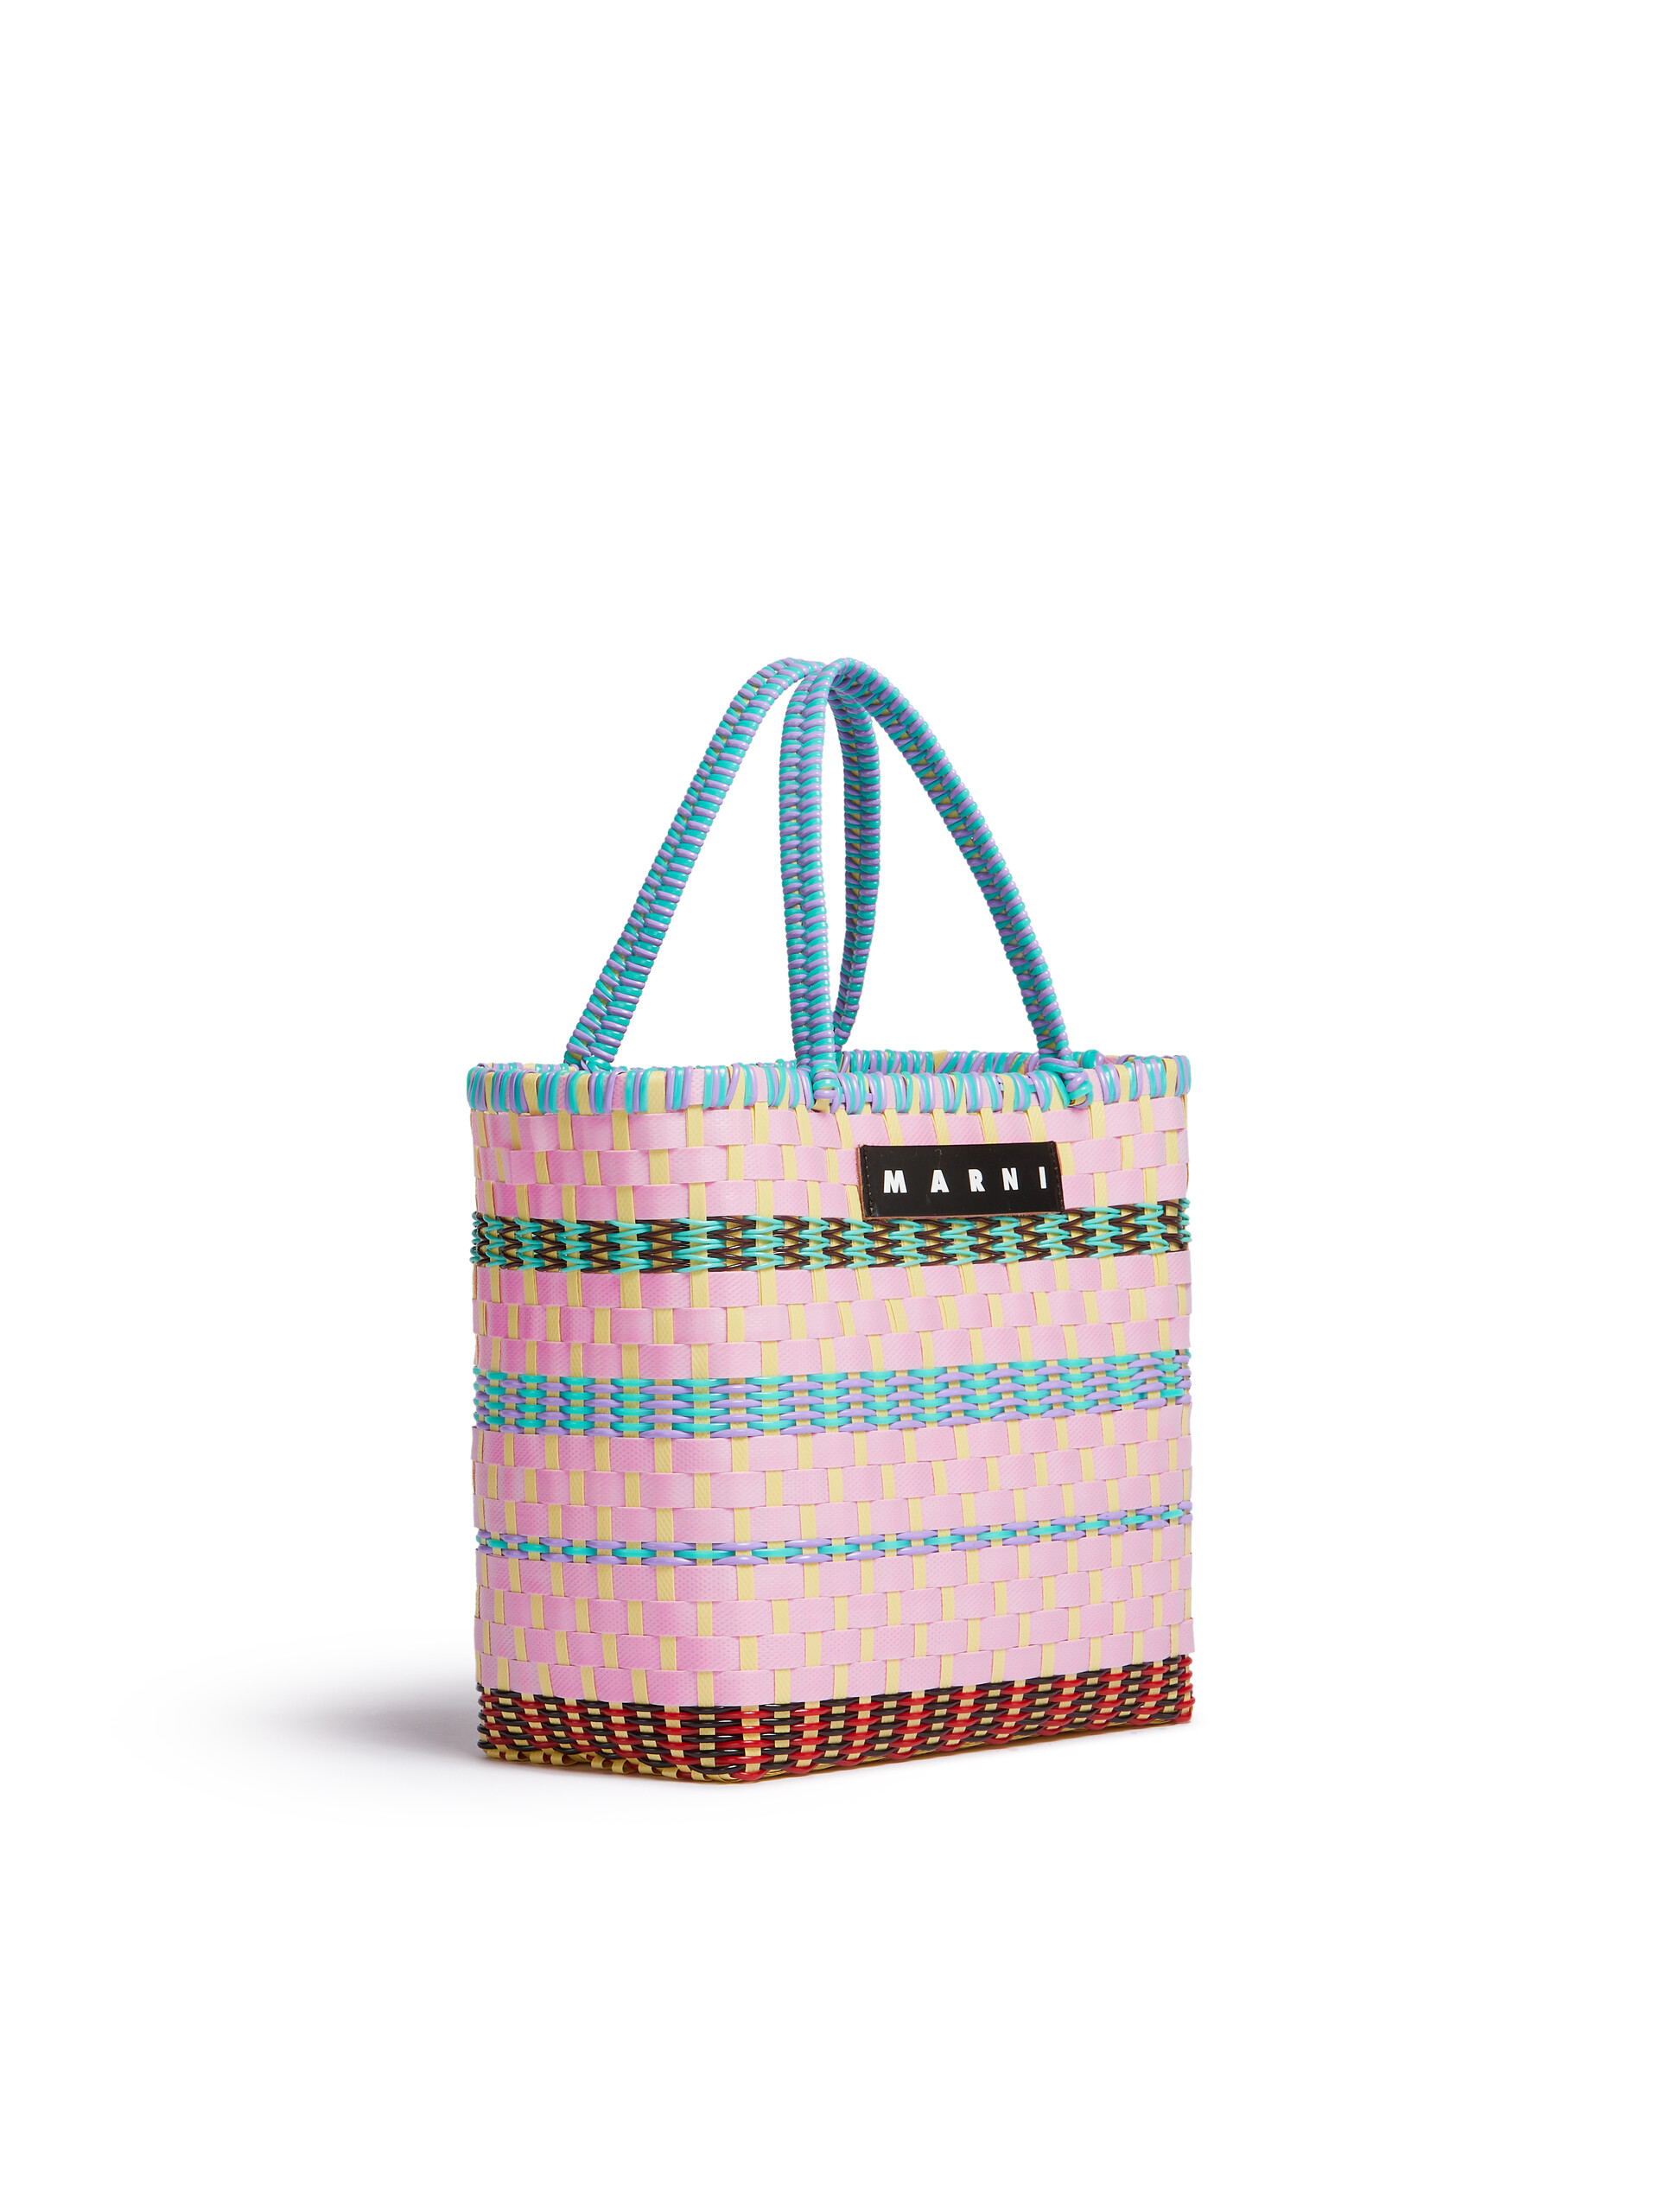 Light pink MARNI MARKET RETRO BASKET bag - Shopping Bags - Image 2